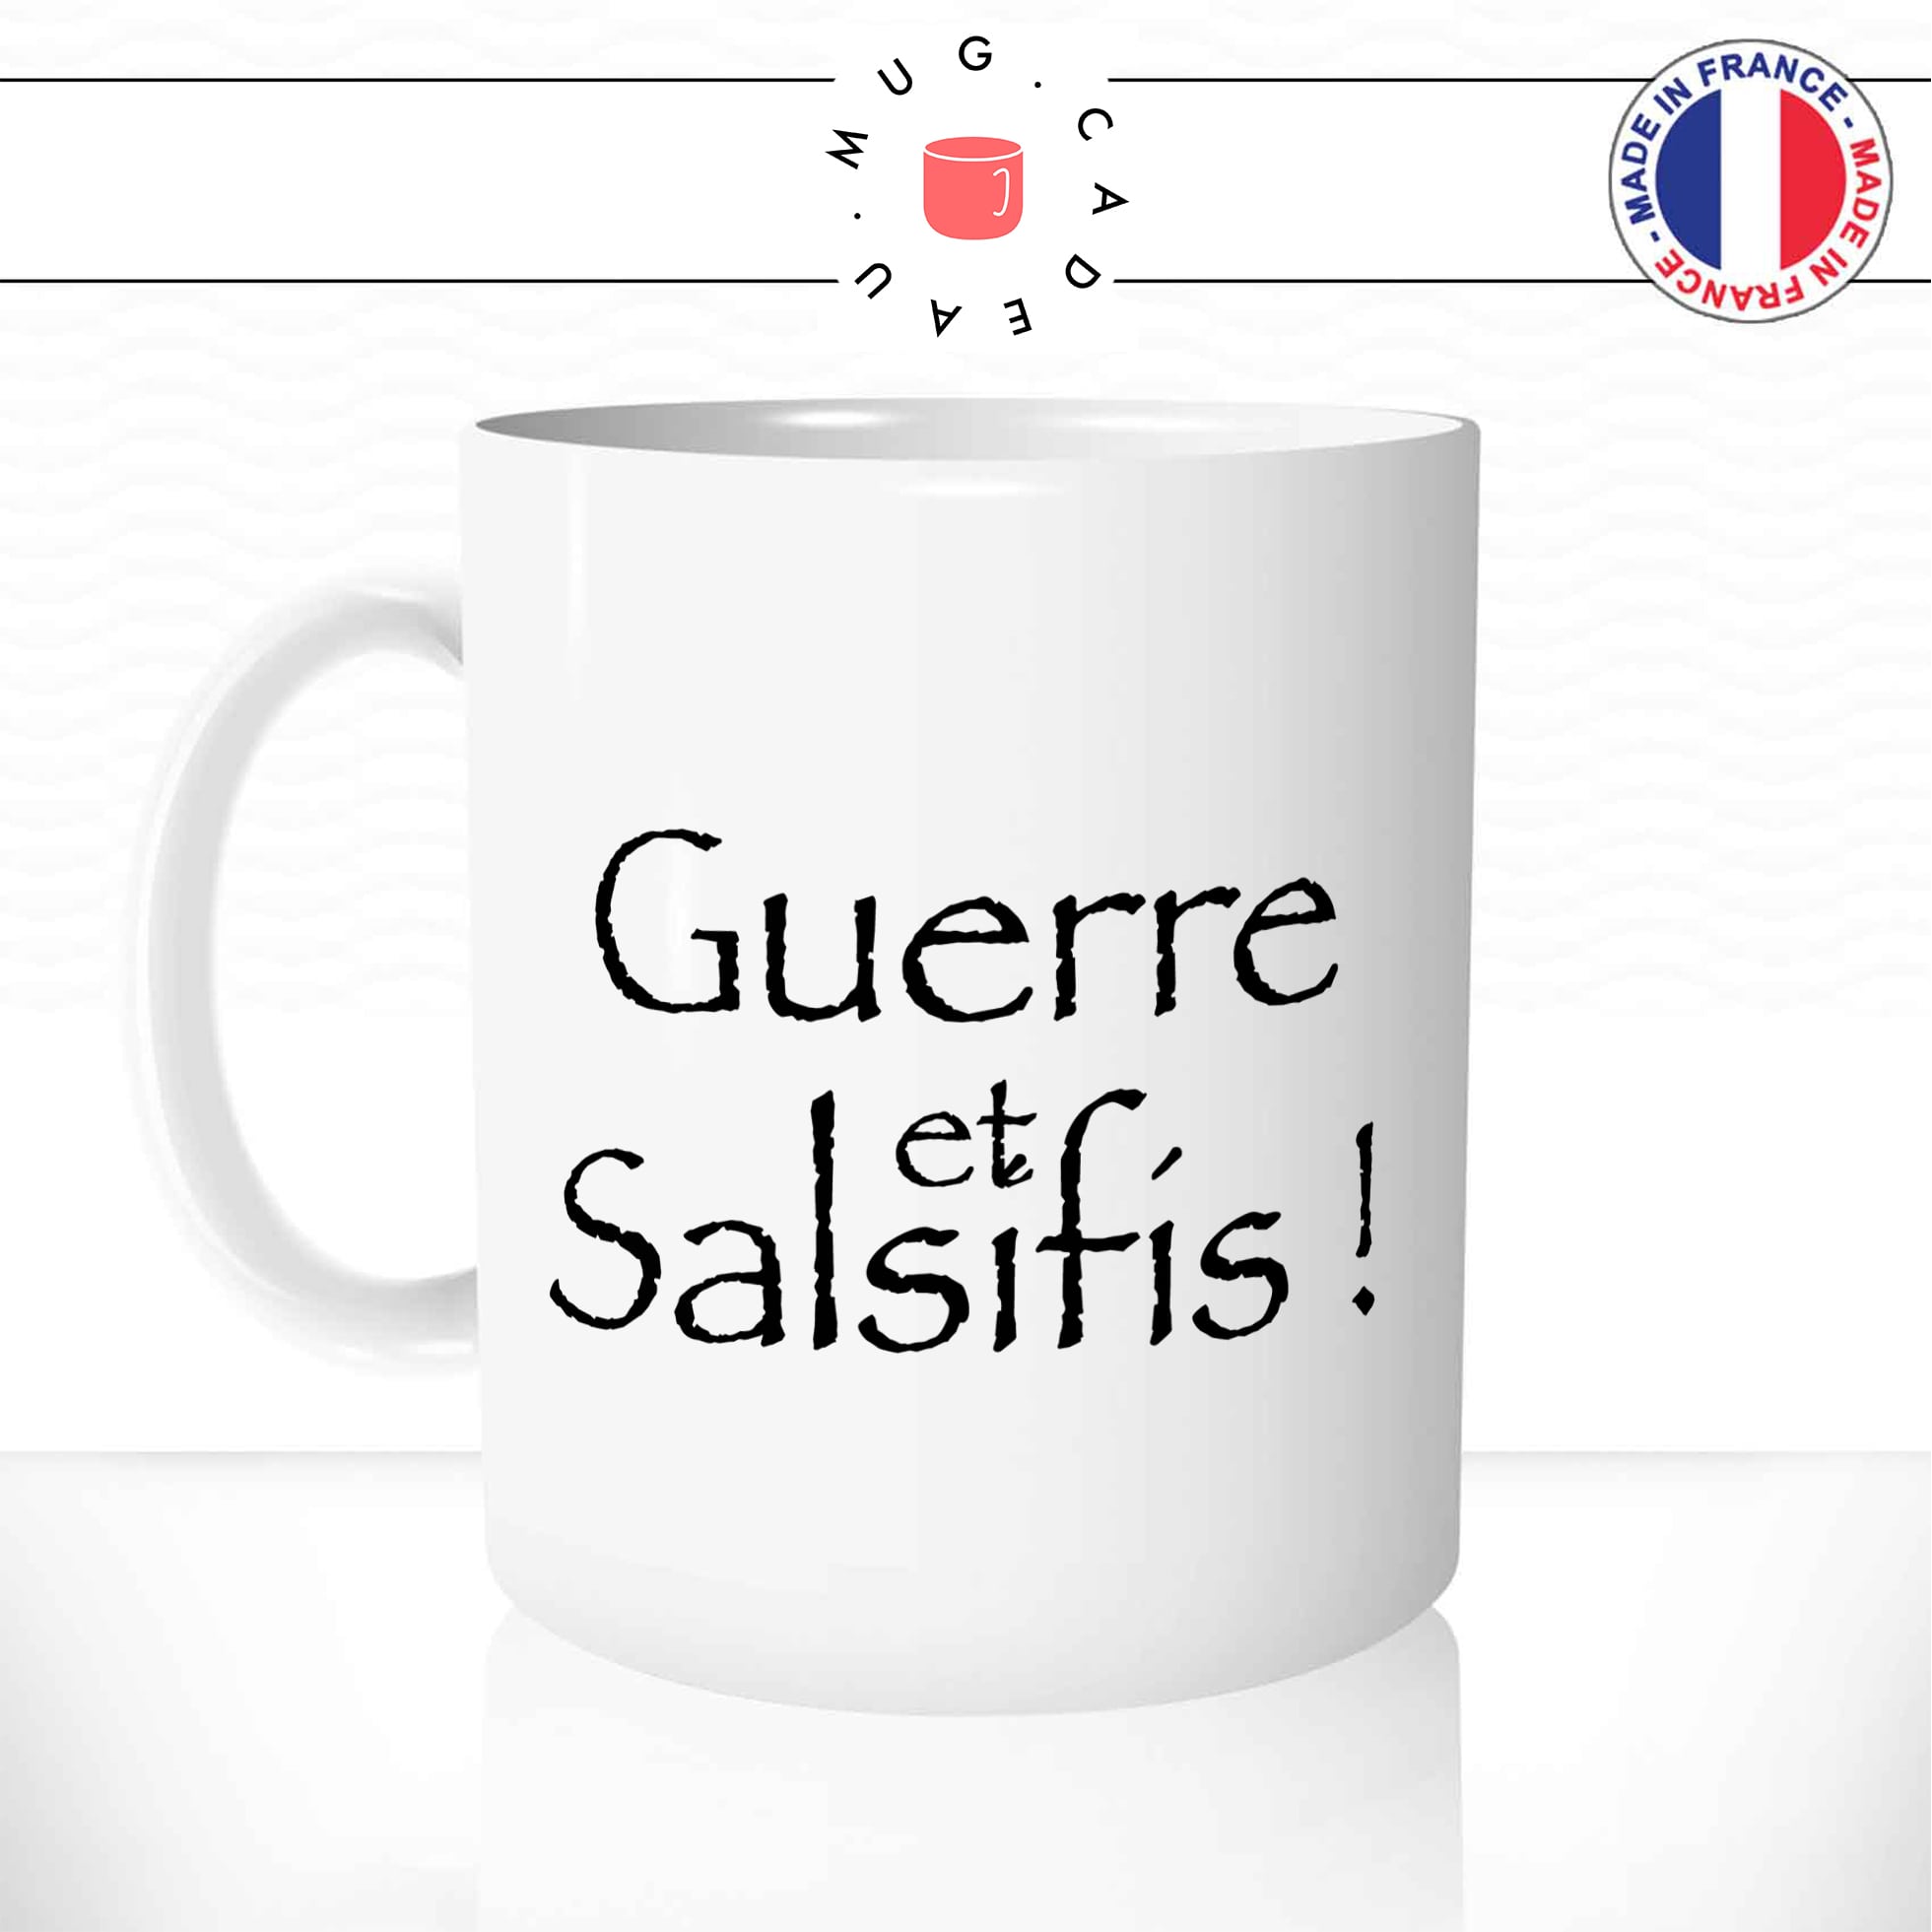 mug-tasse-guerre-et-salsifis-roi-burgonde-atila-kaamelott-citation-culte-humour-francais-drole-fun-idée-cadeau-original-café-thé-personnalisée-min